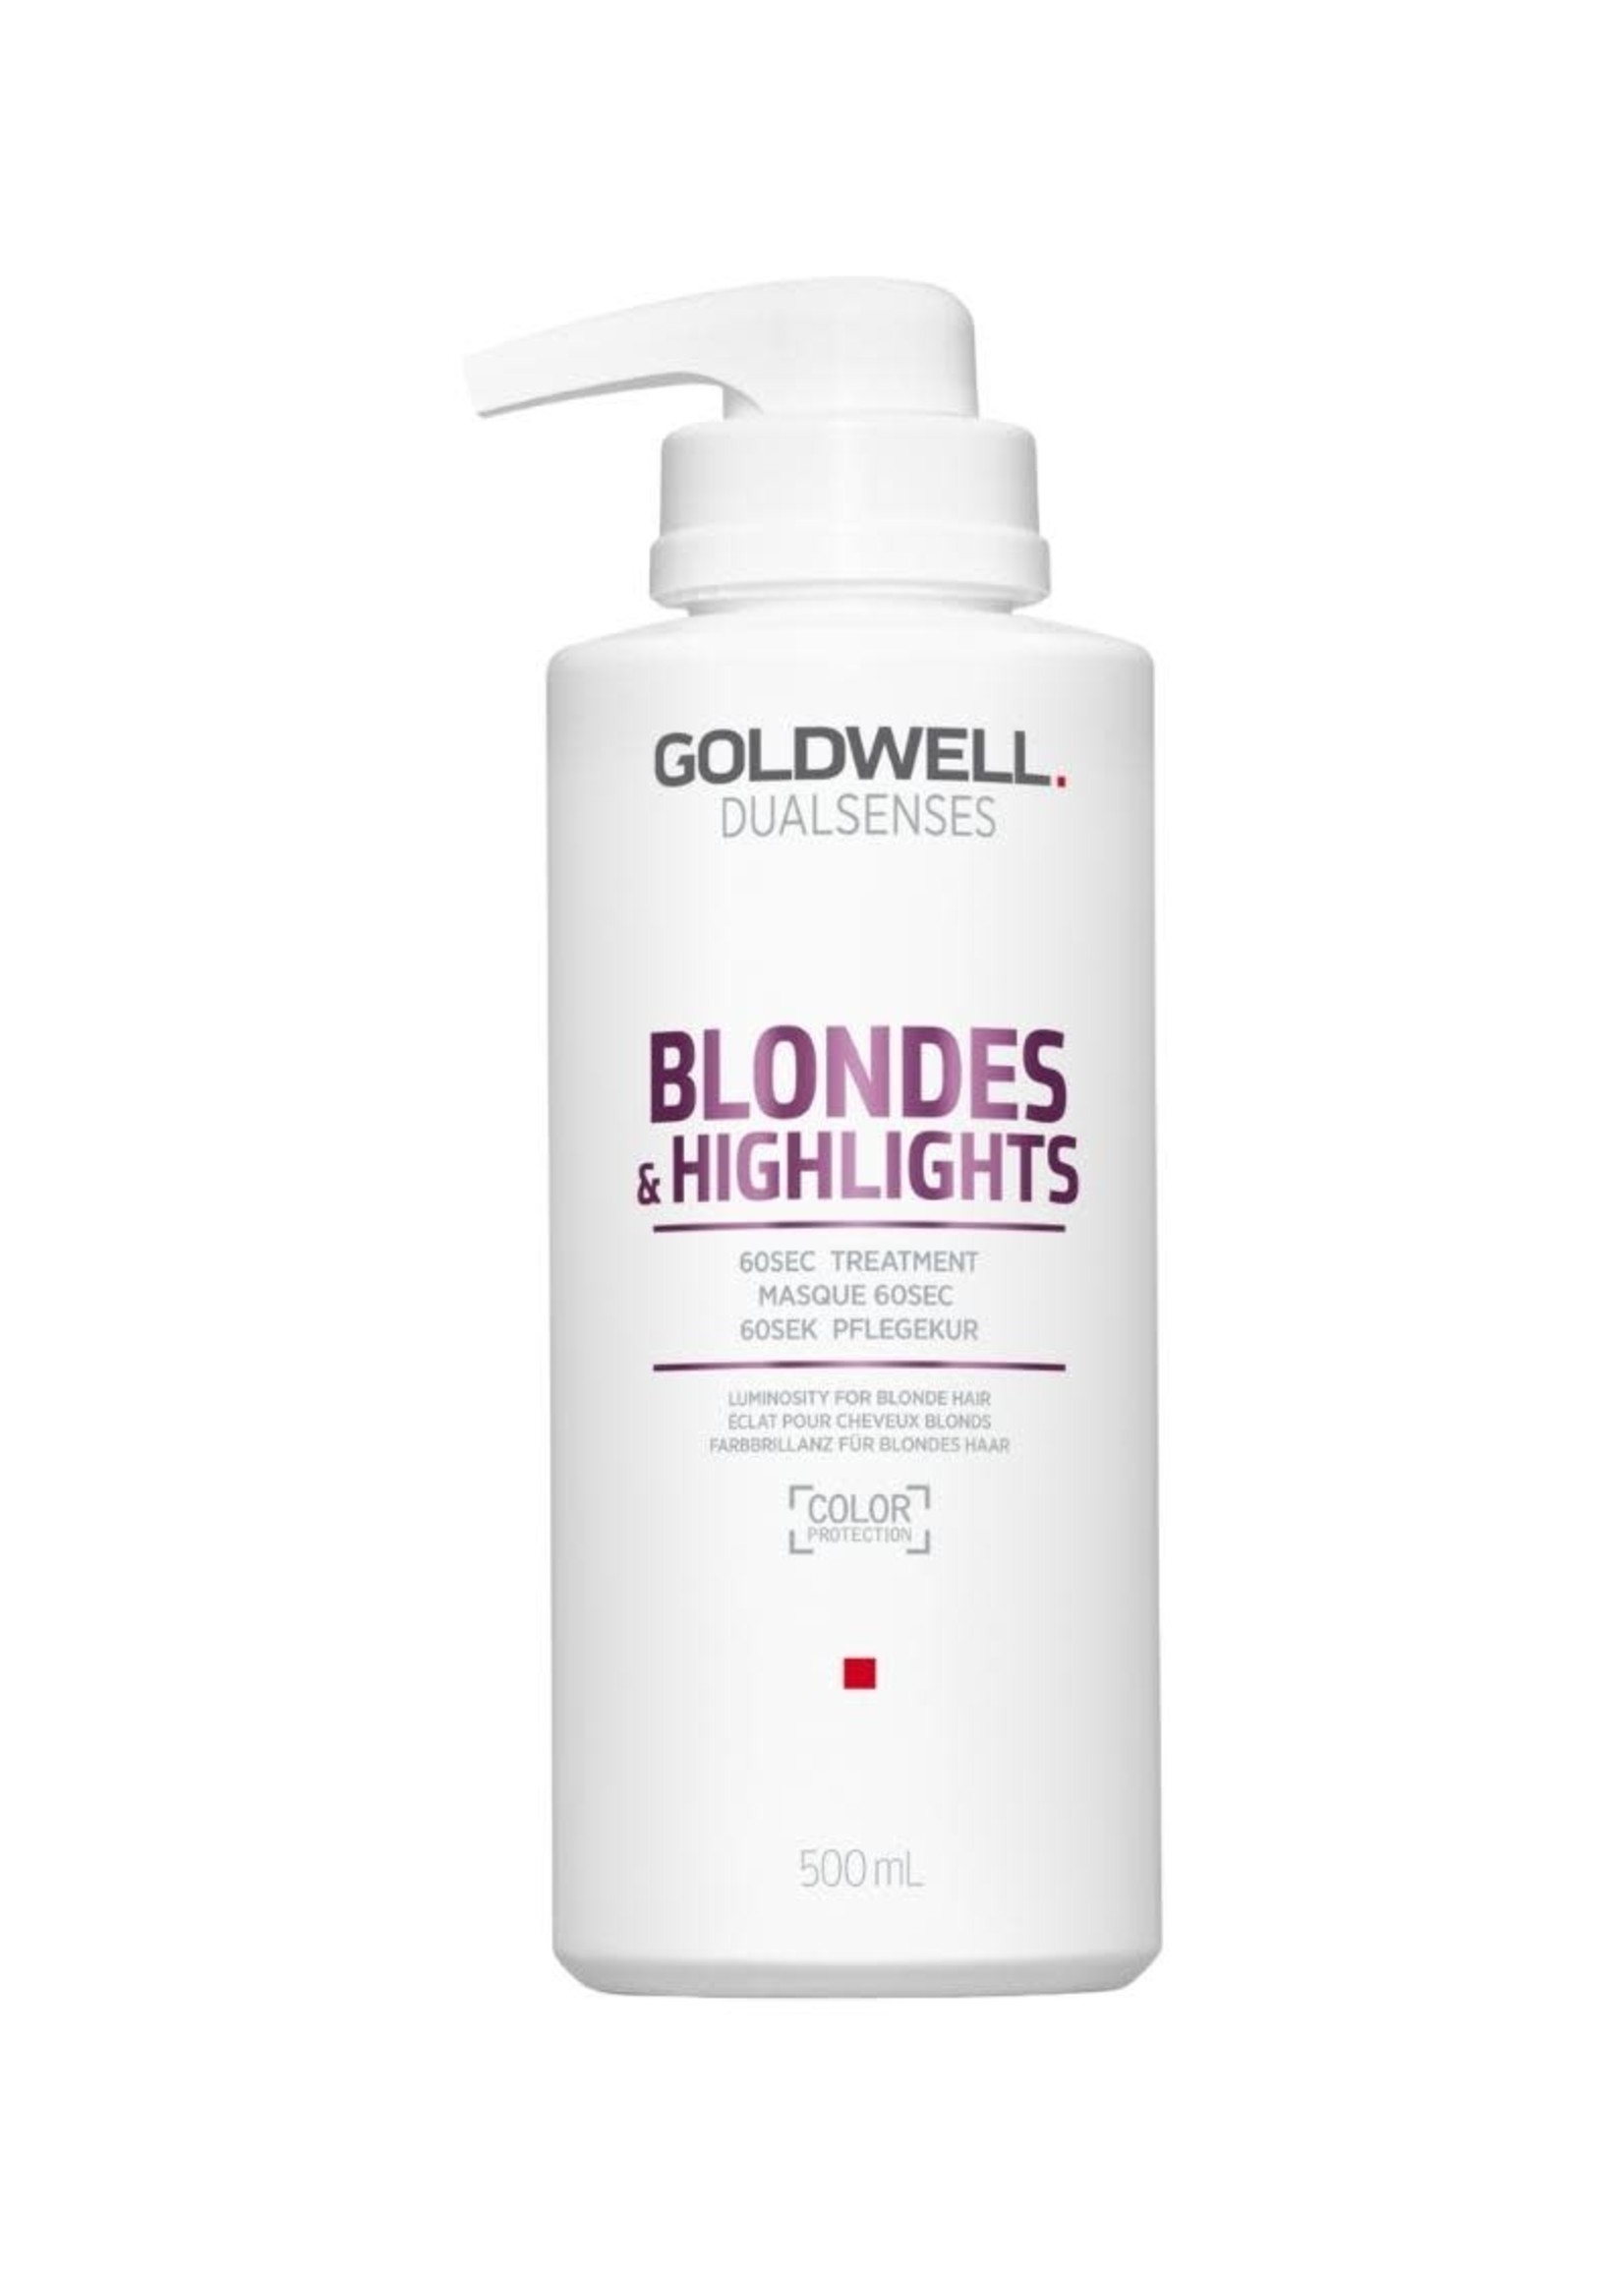 Goldwell Goldwell Dualsenses Blondes & Highlights 60sec Treatment 500ml